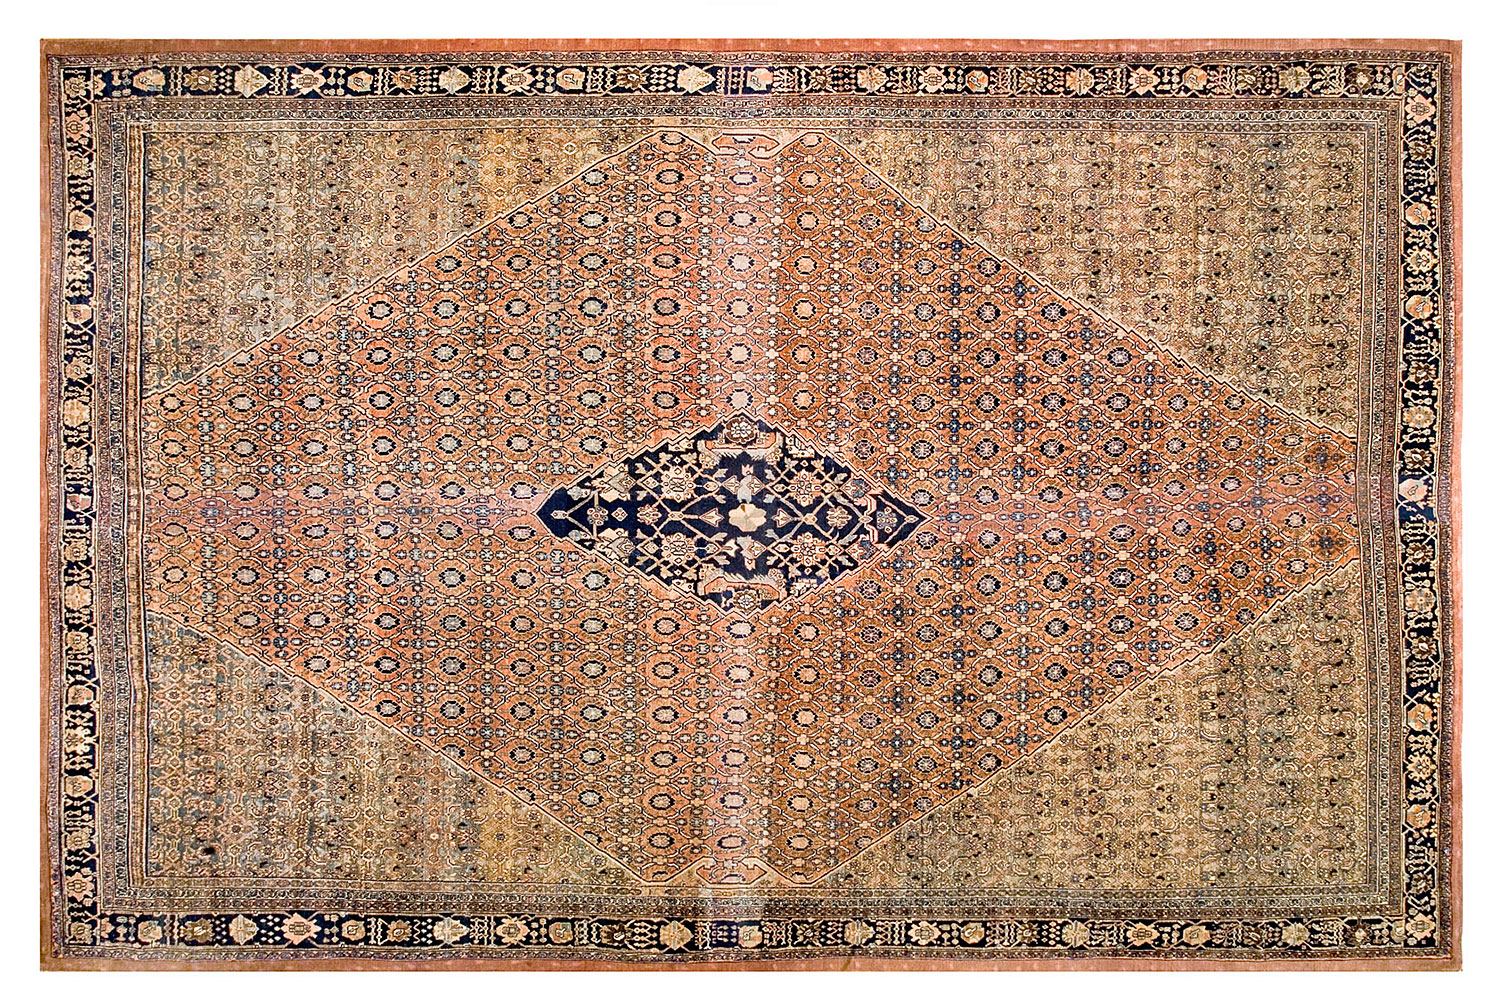 Antique bibi kabad Carpet - # 54146